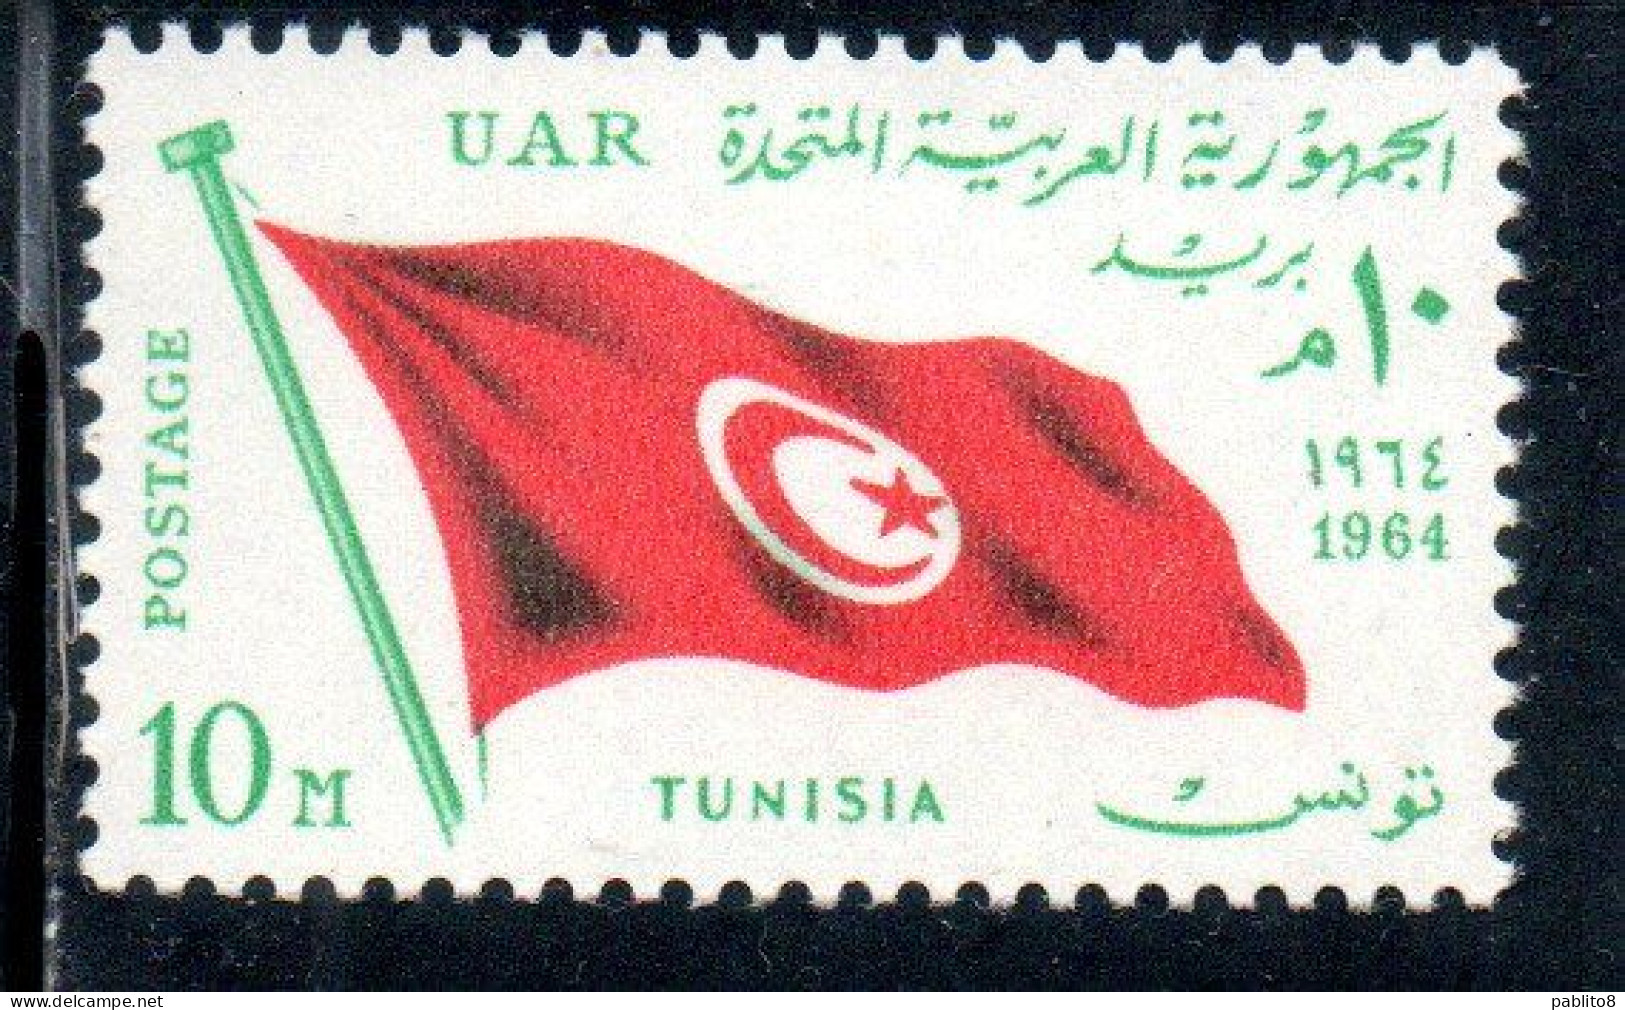 UAR EGYPT EGITTO 1964 SECOND MEETING OF HEADS STATE ARAB LEAGUE FLAG OF TUNISIA 10m MNH - Ungebraucht